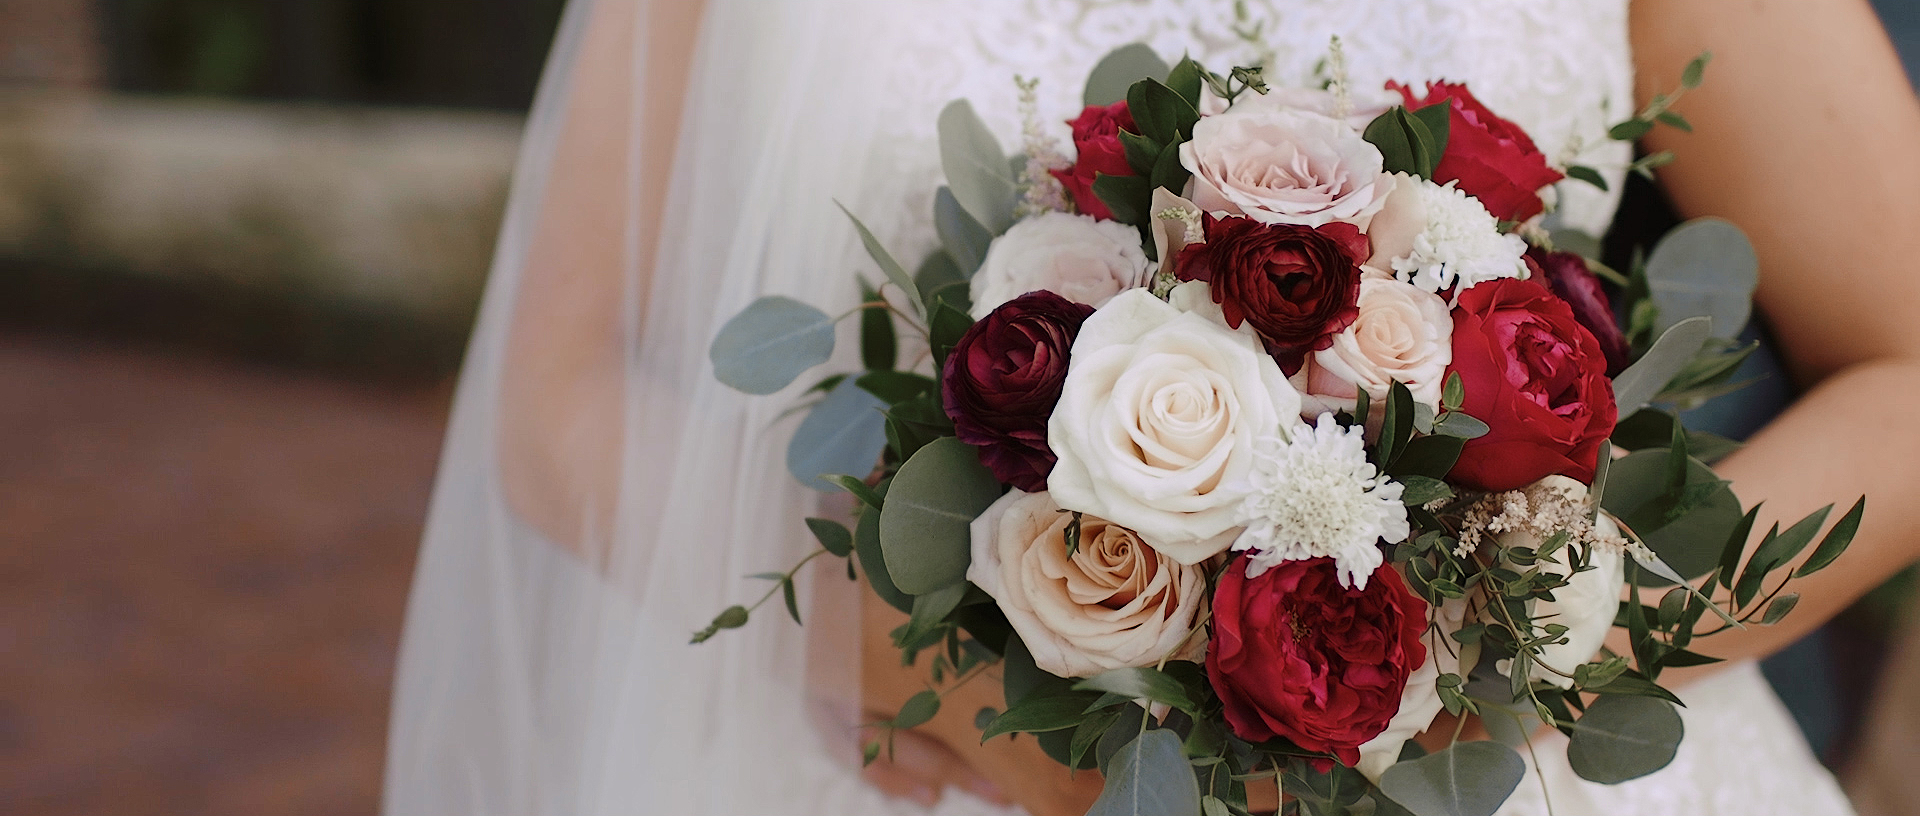 moore-flowers-wichita-wedding-designer